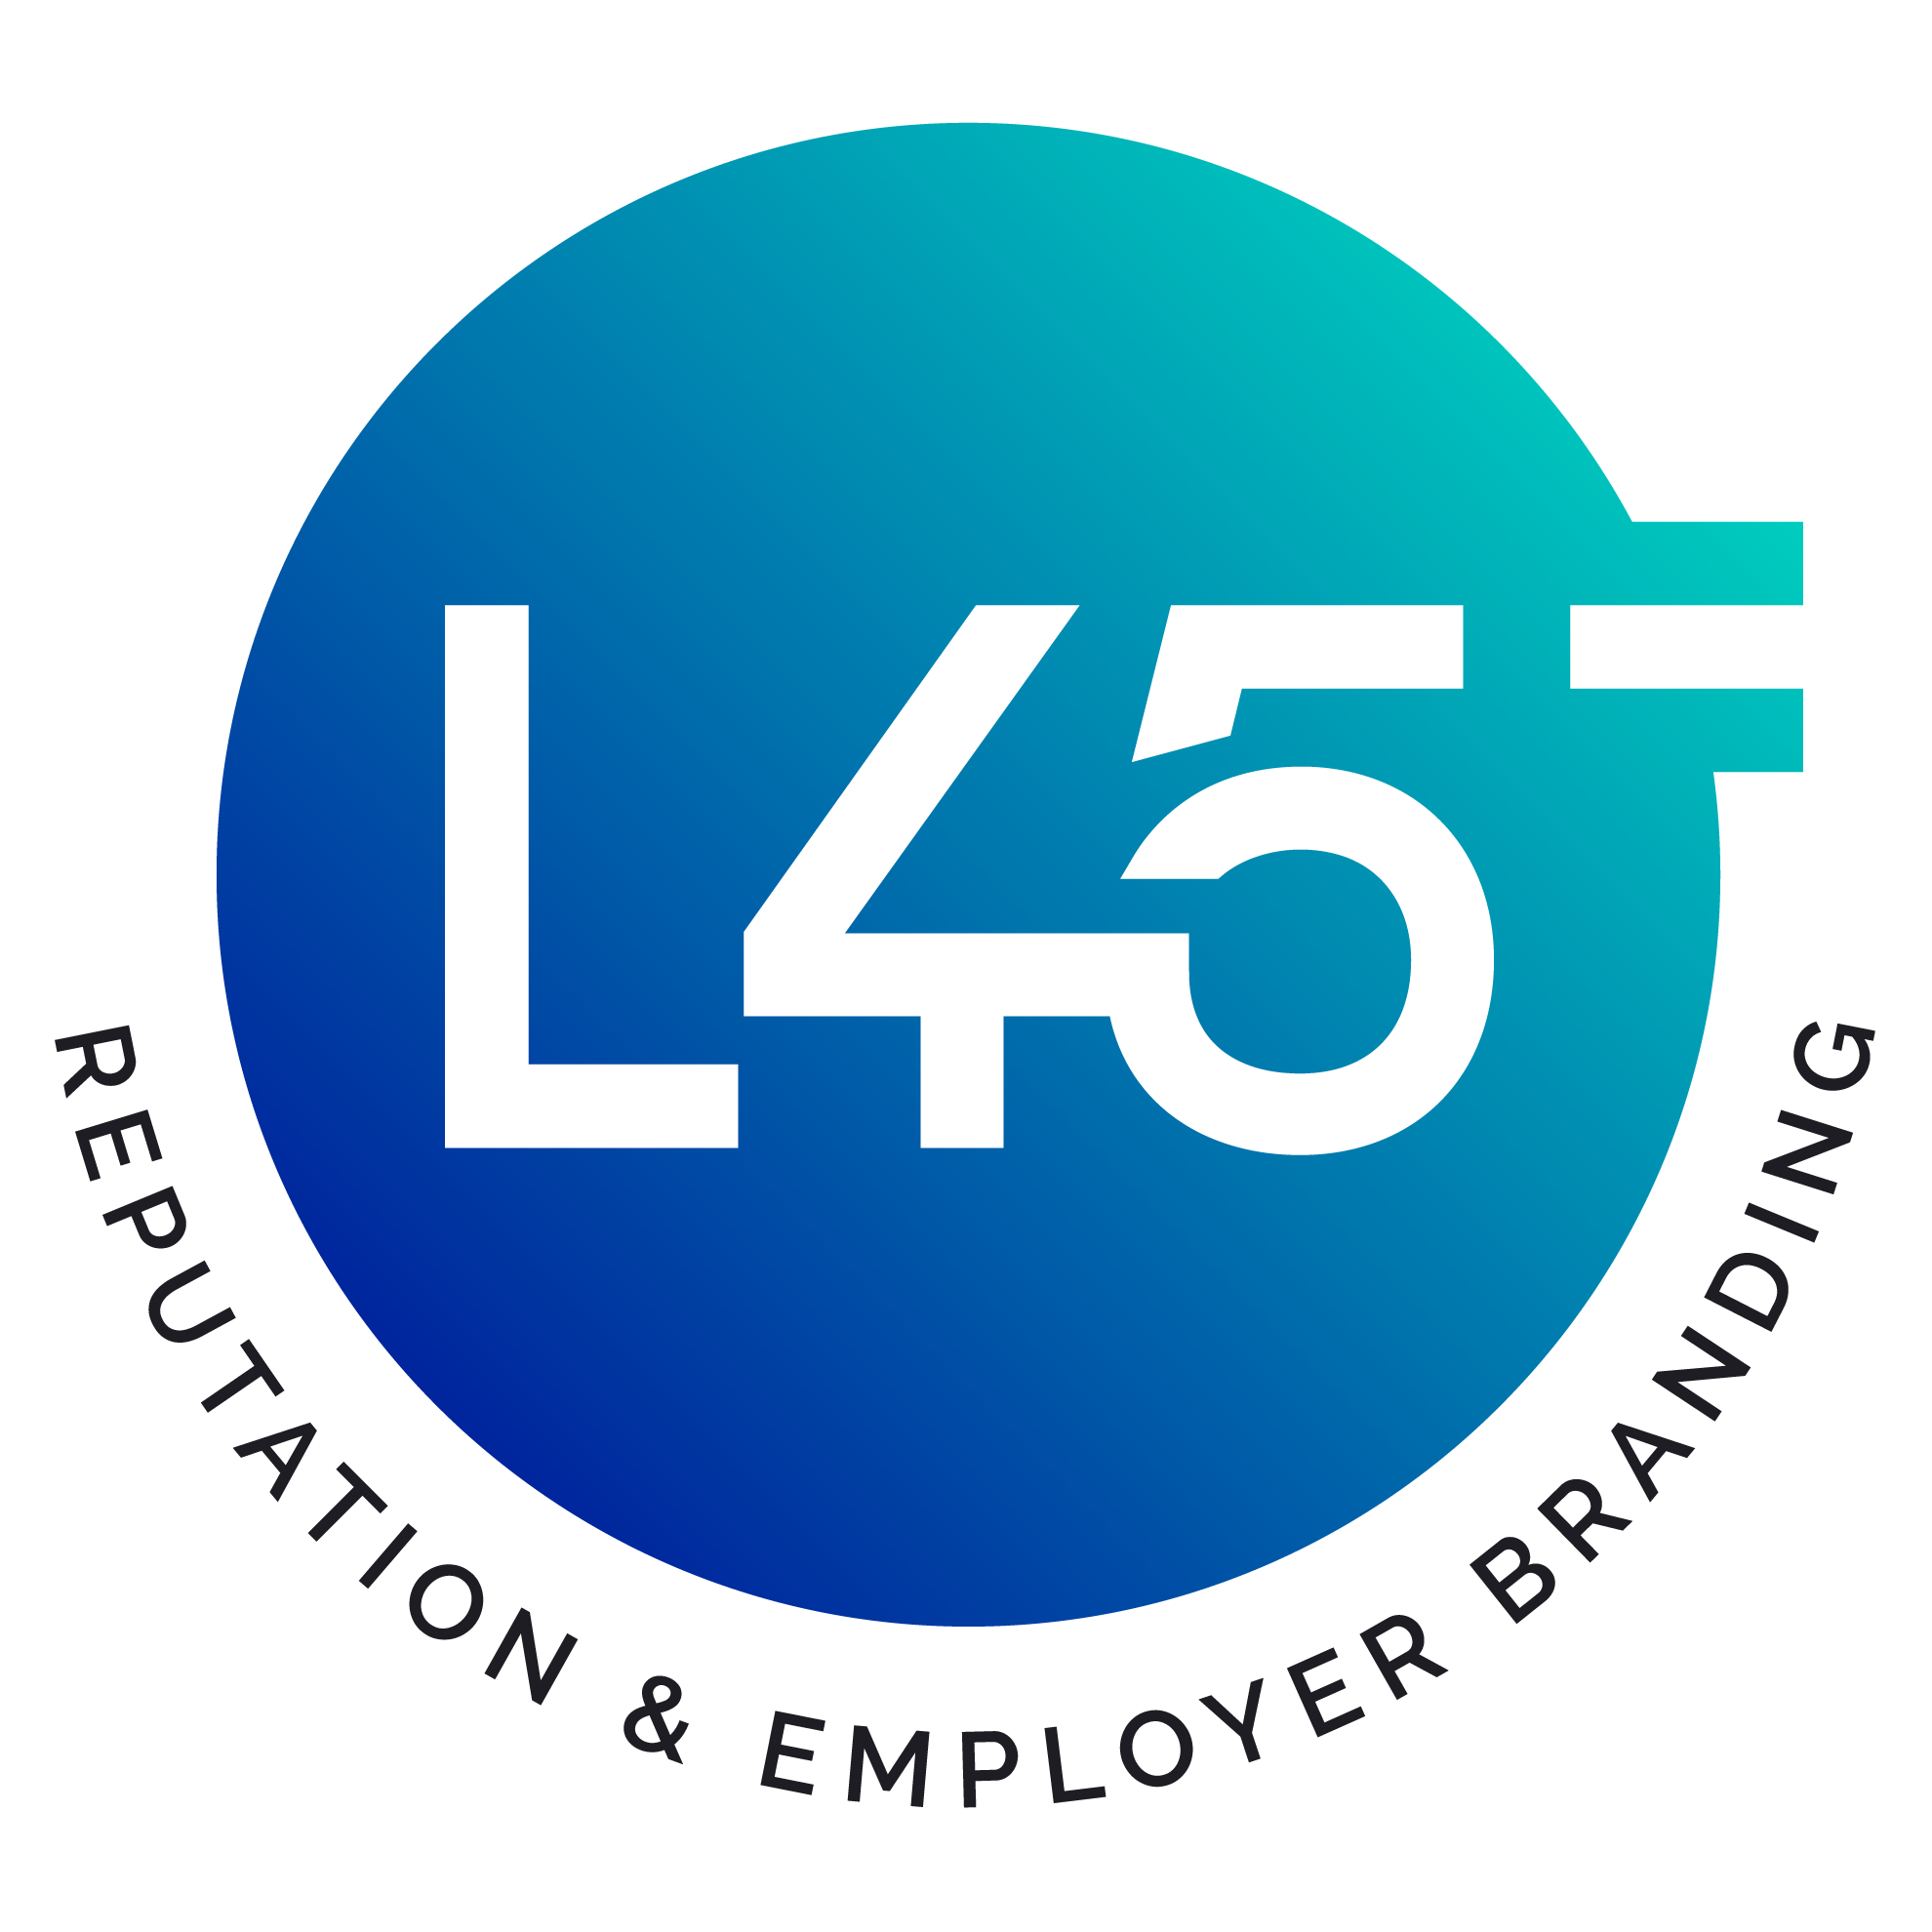 L45 logo payoff scuro | Digital Innovation Days